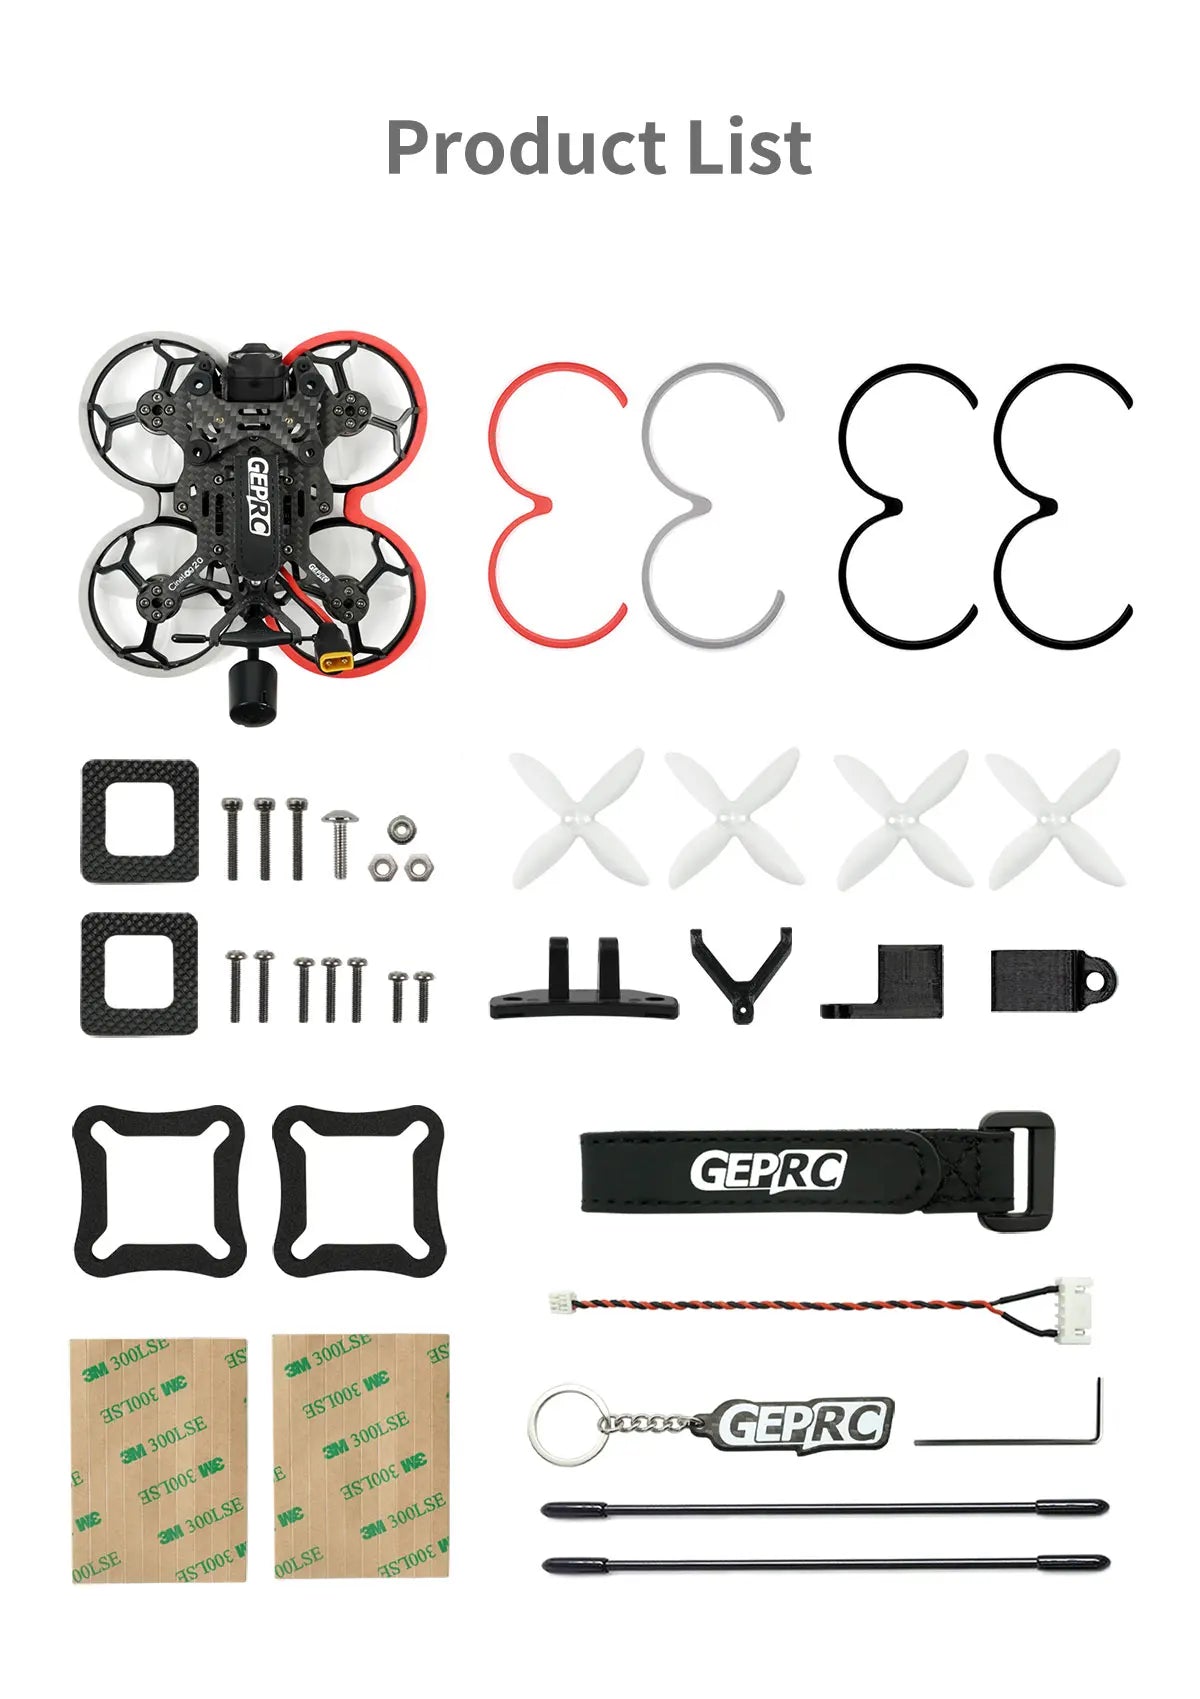 GEPRC Cinelog20 HD, adopts GEPRC SPEEDX2 1303.5 5500KV motor and G